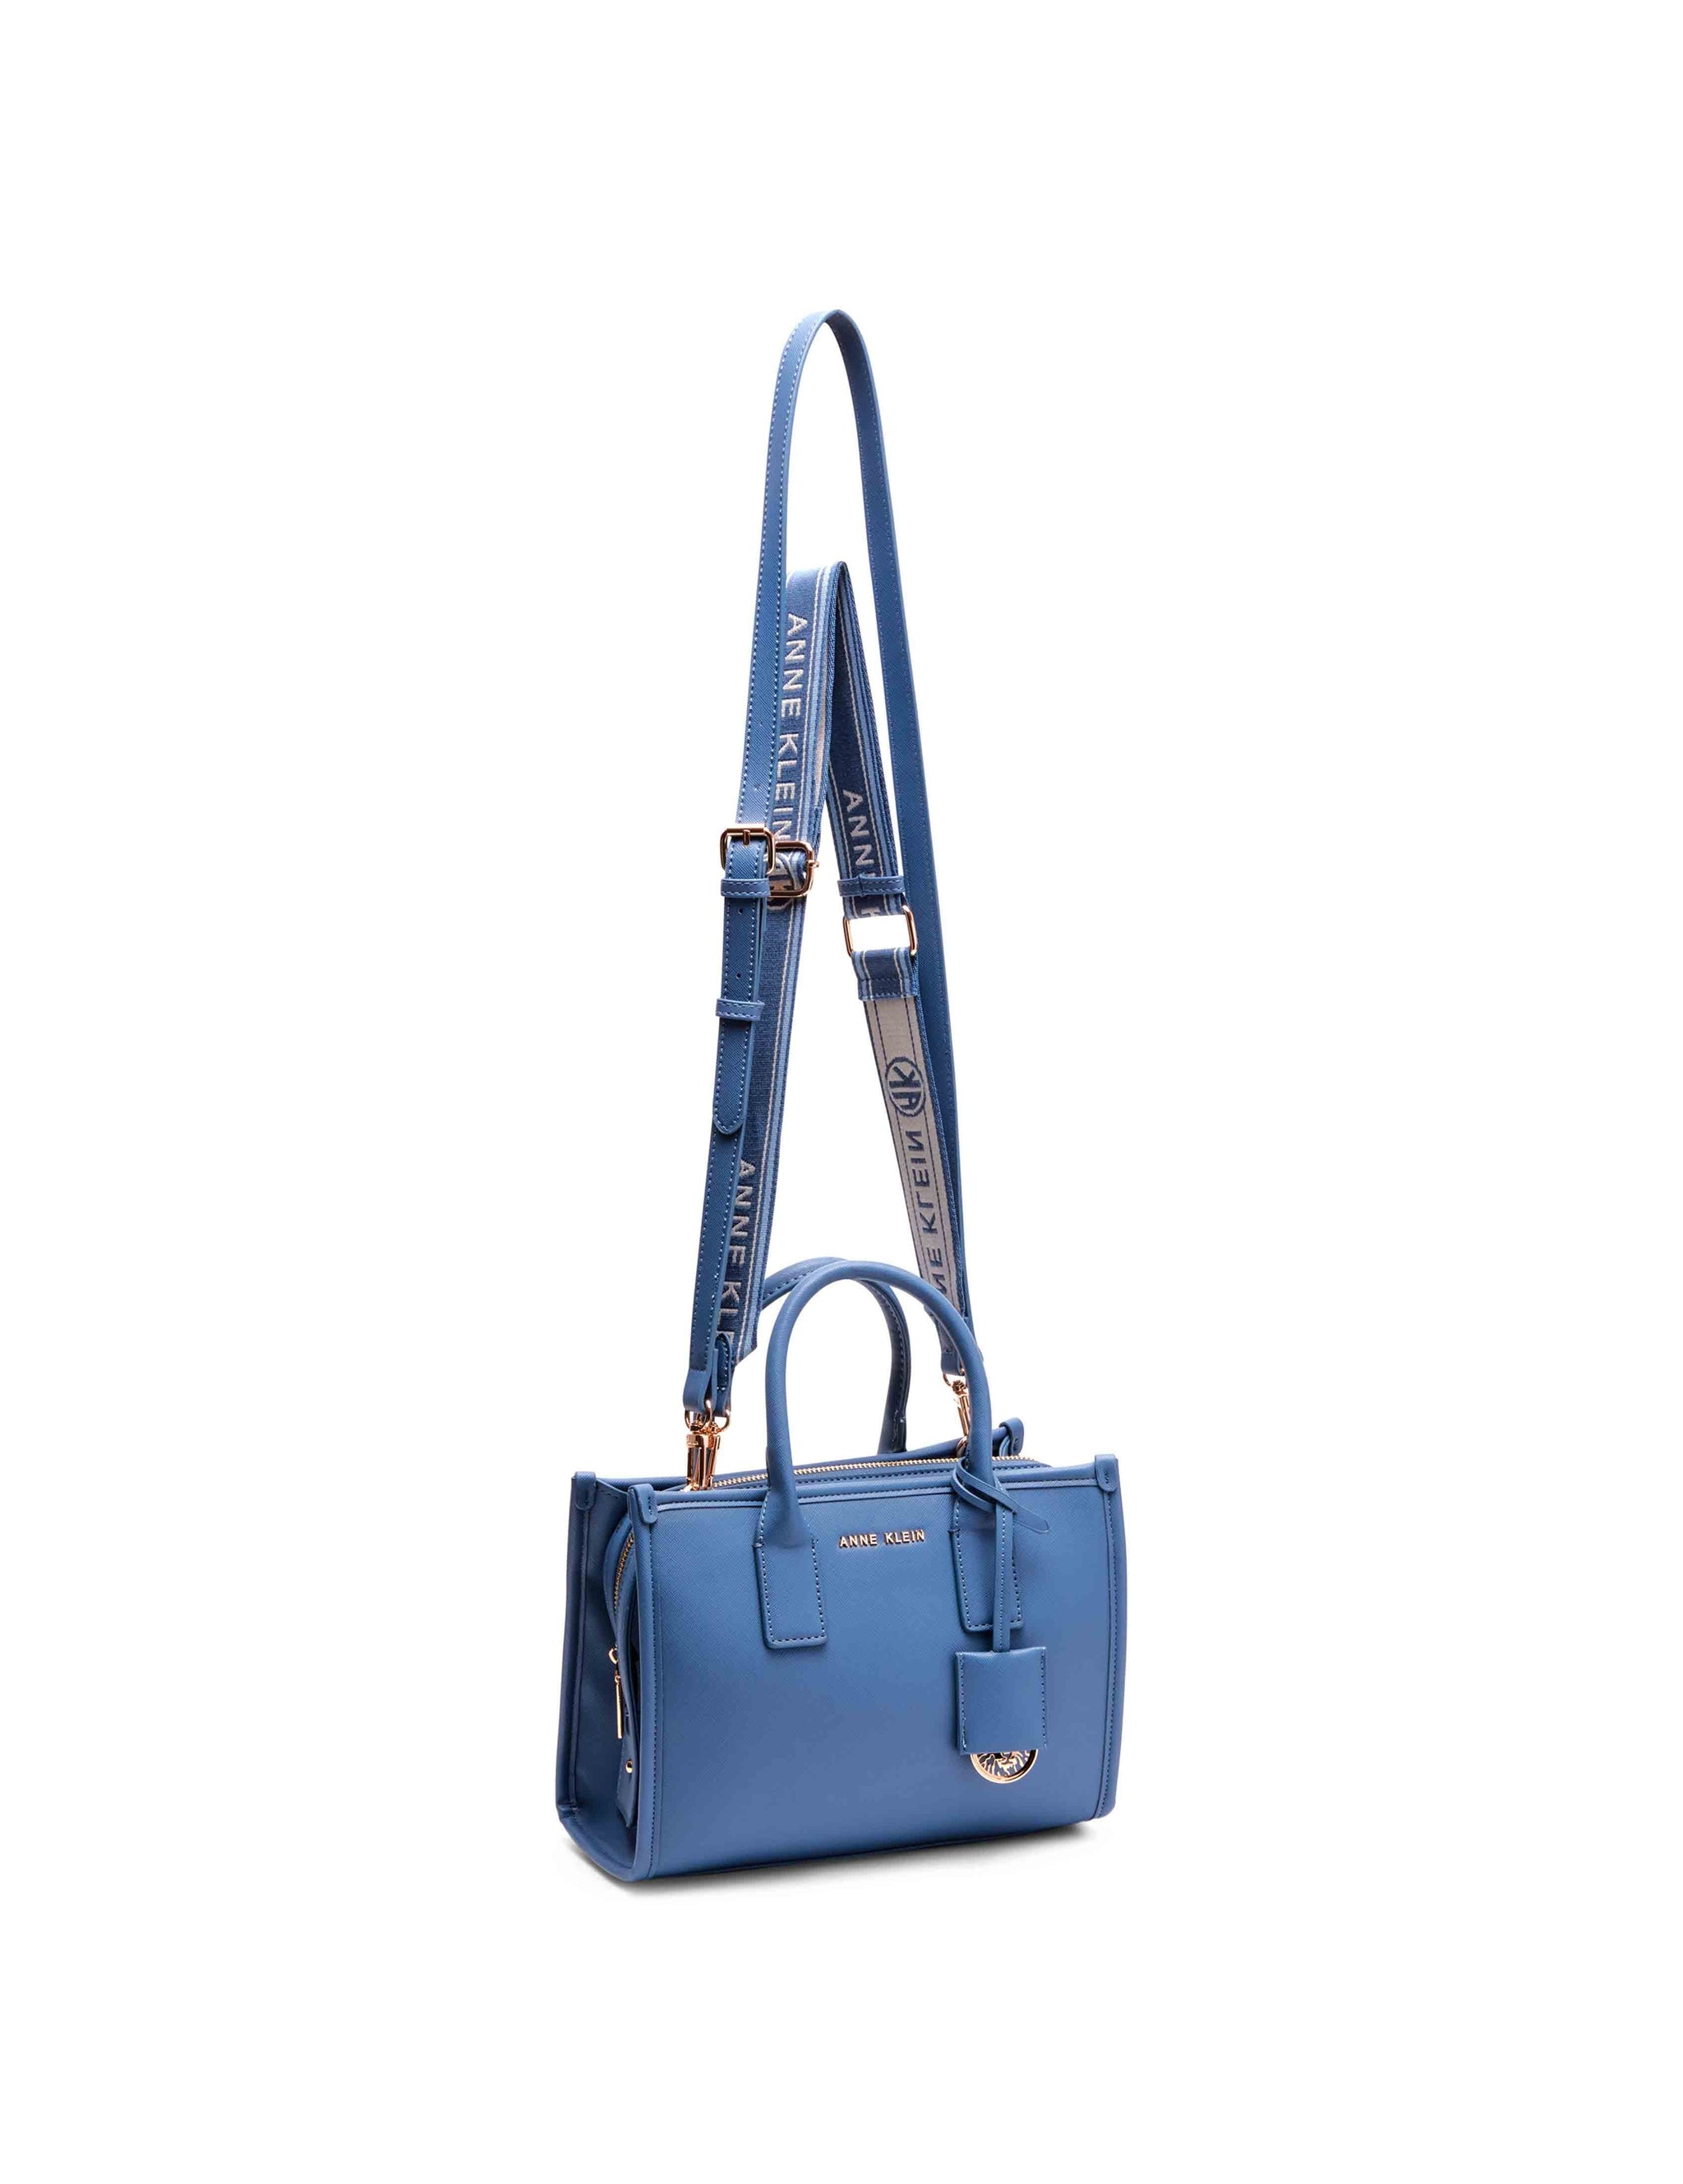 Anne Klein Blue Faux Croc Handbag | eBay